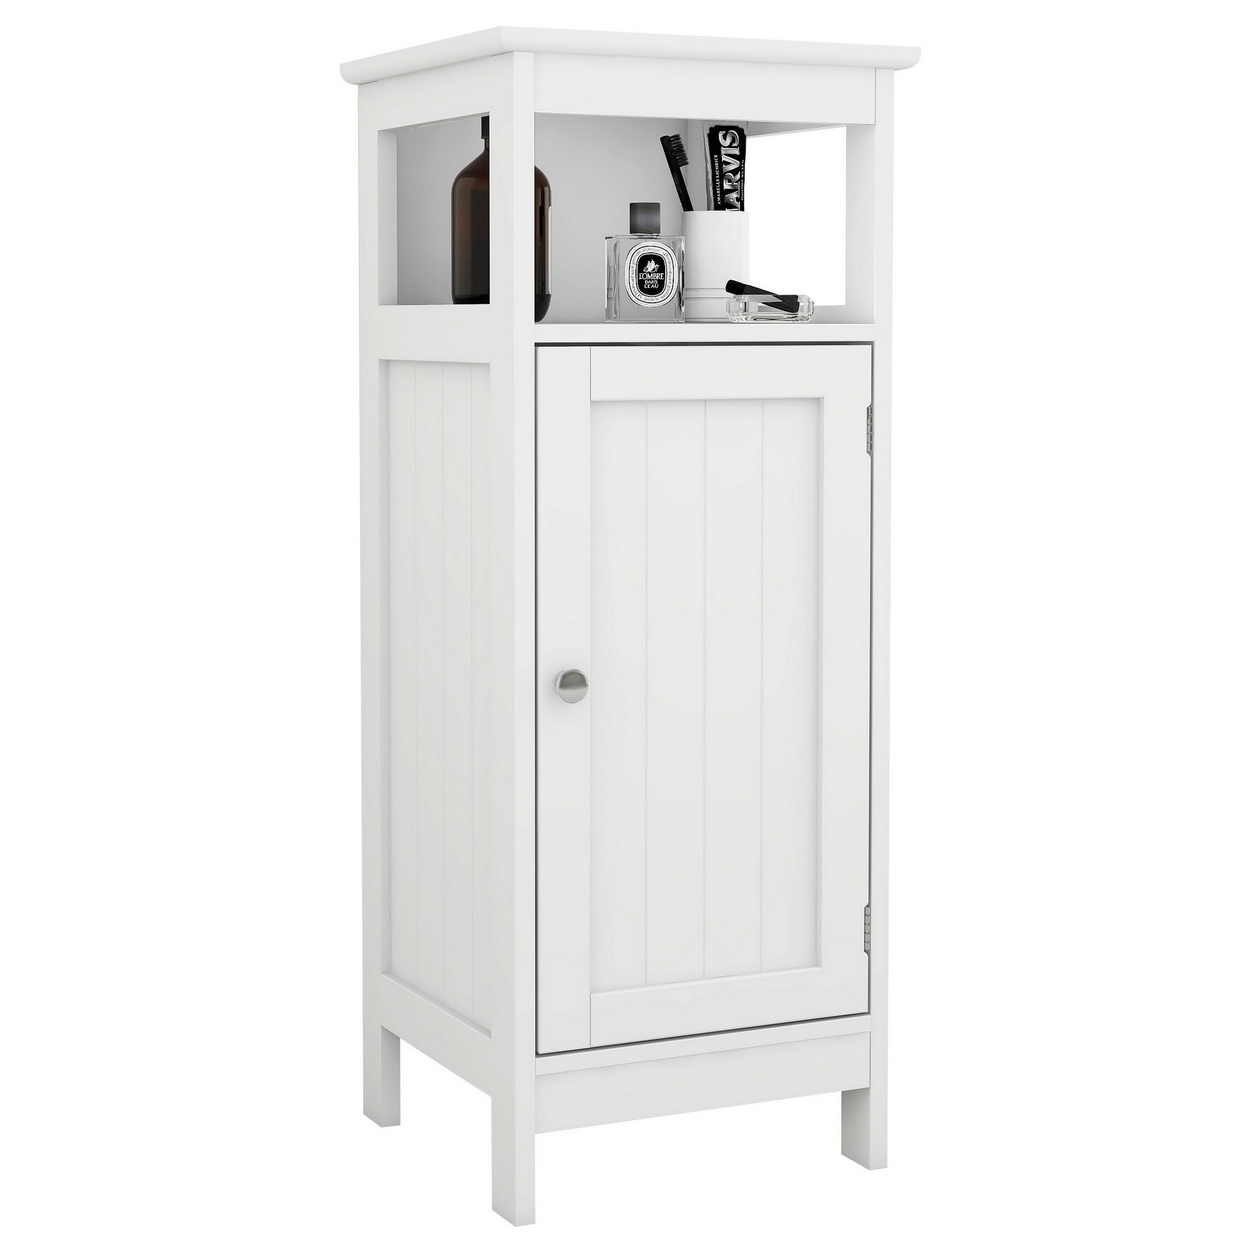 32 Inch Single Door Tall Storage Cabinet With 1 Open Shelf, Crisp White- Saltoro Sherpi